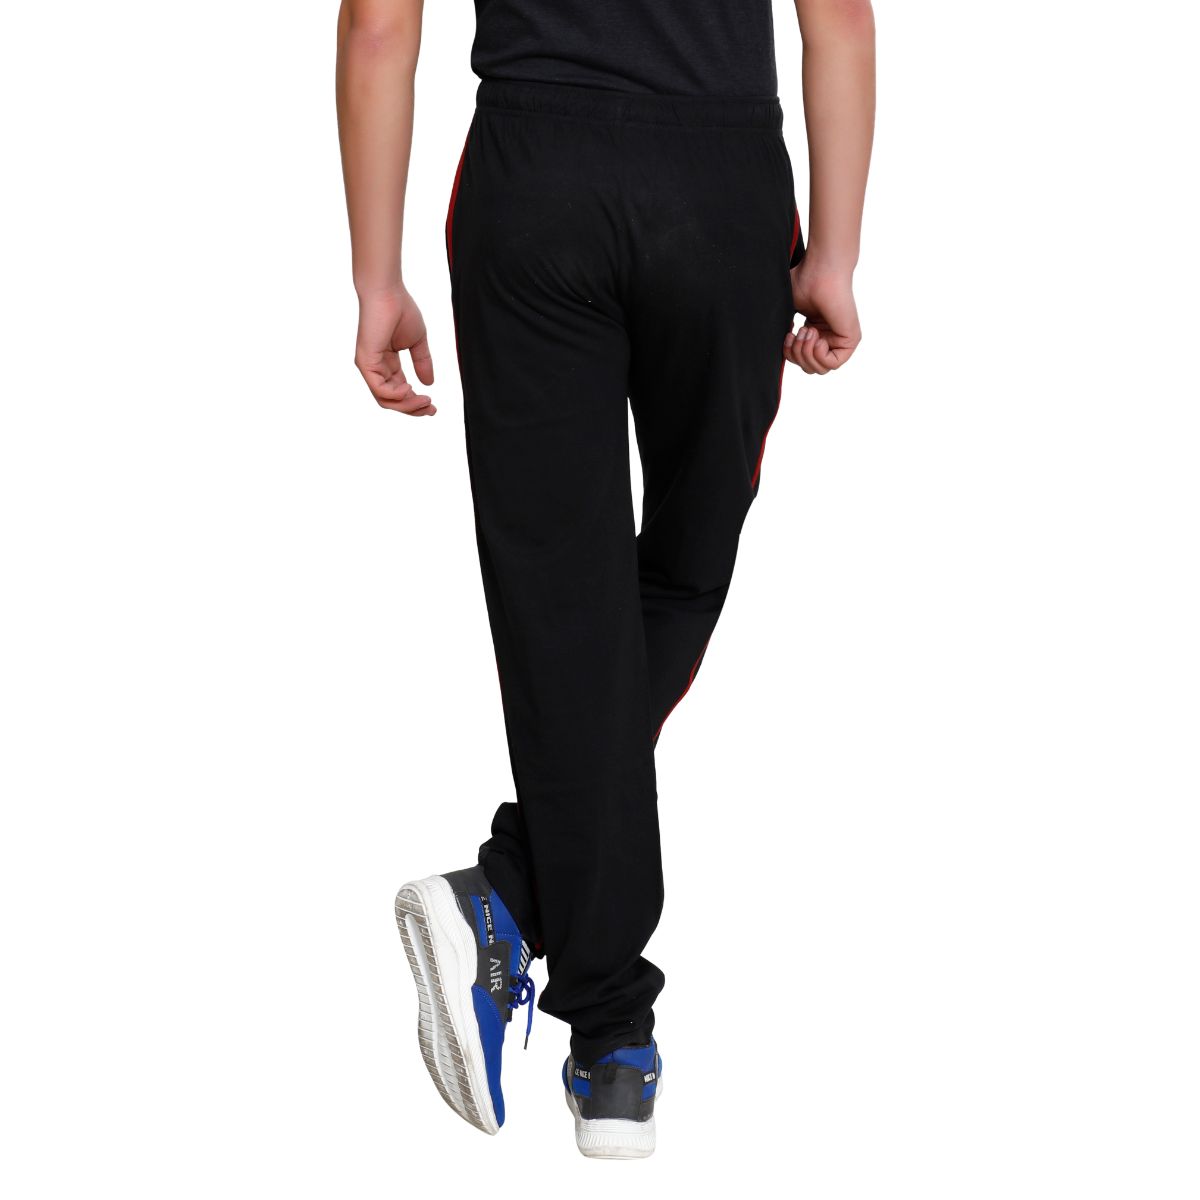 sports track pants for mensports track pants crickettrack pant for  mentrack pant for men with zip pocket